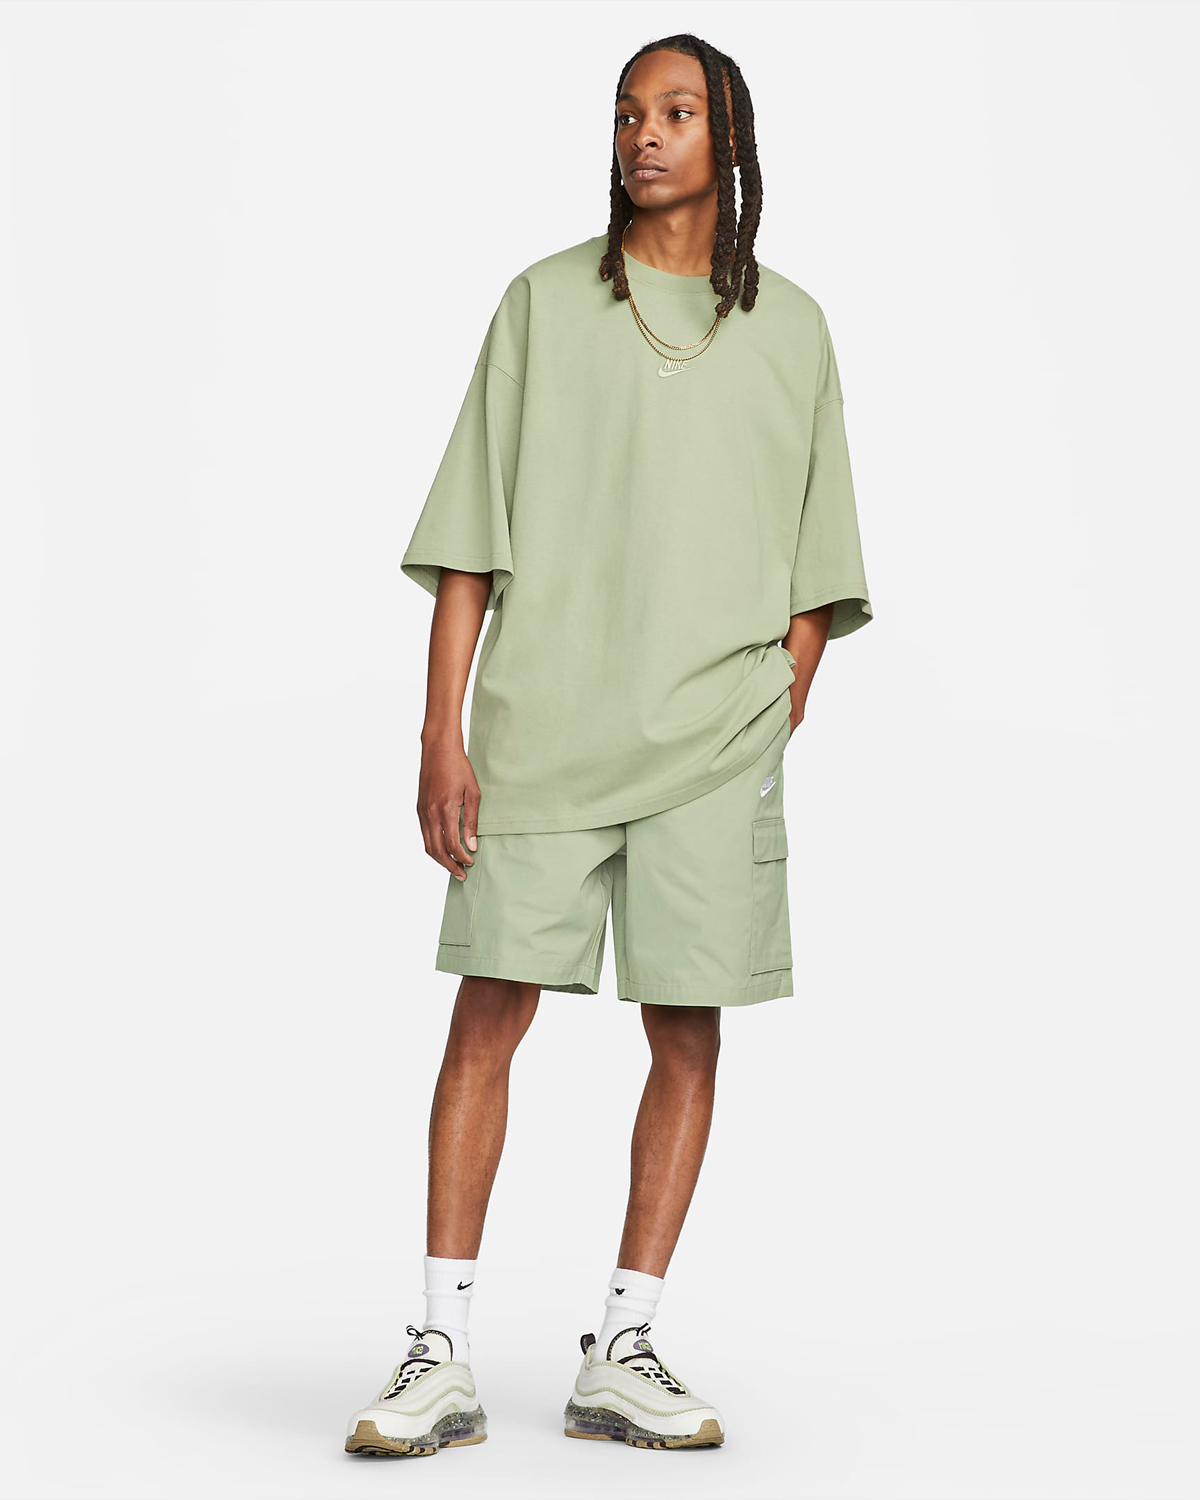 Nike-Sportswear-Oversized-T-Shirt-Oil-Green-Outfit